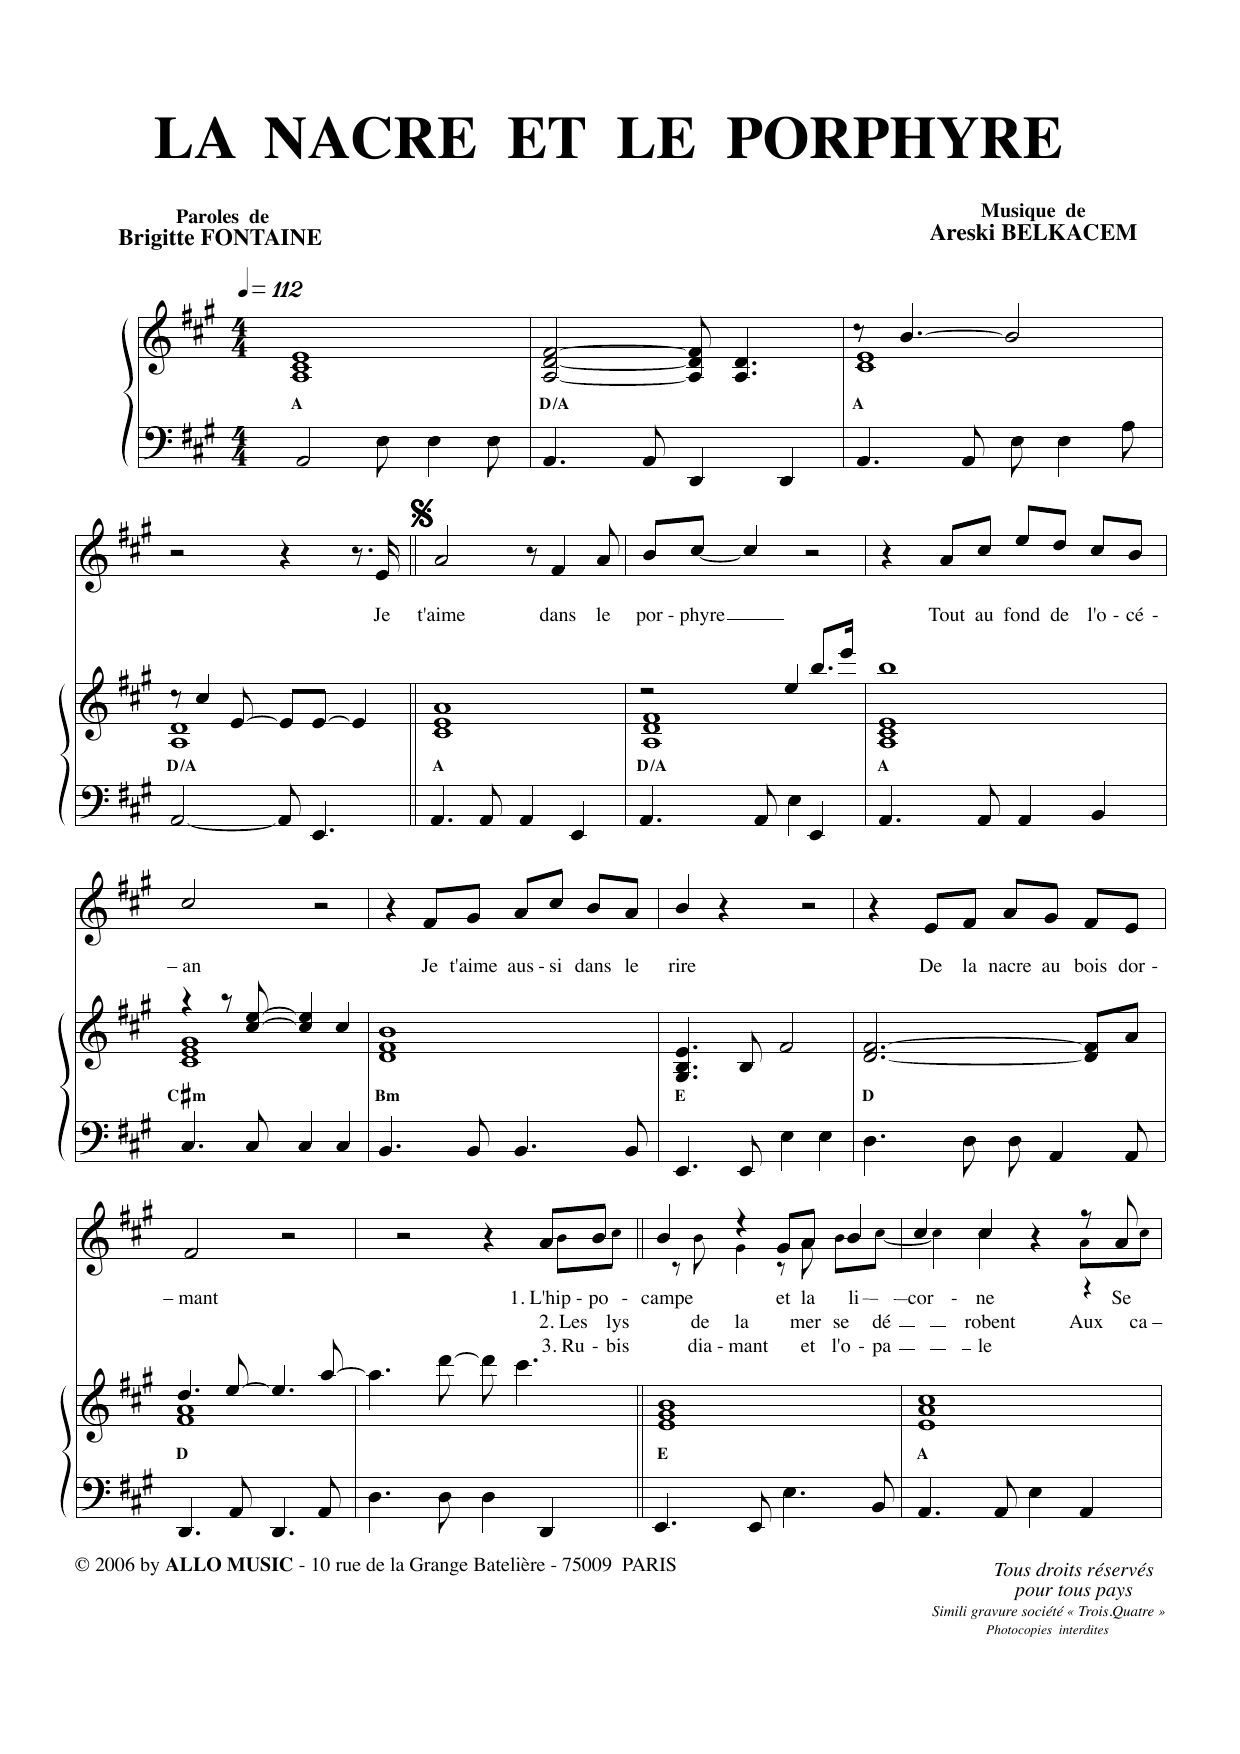 Brigitte Fontaine & Areski Belkacem La Nacre Et Le Porphyre Sheet Music Notes & Chords for Piano & Vocal - Download or Print PDF